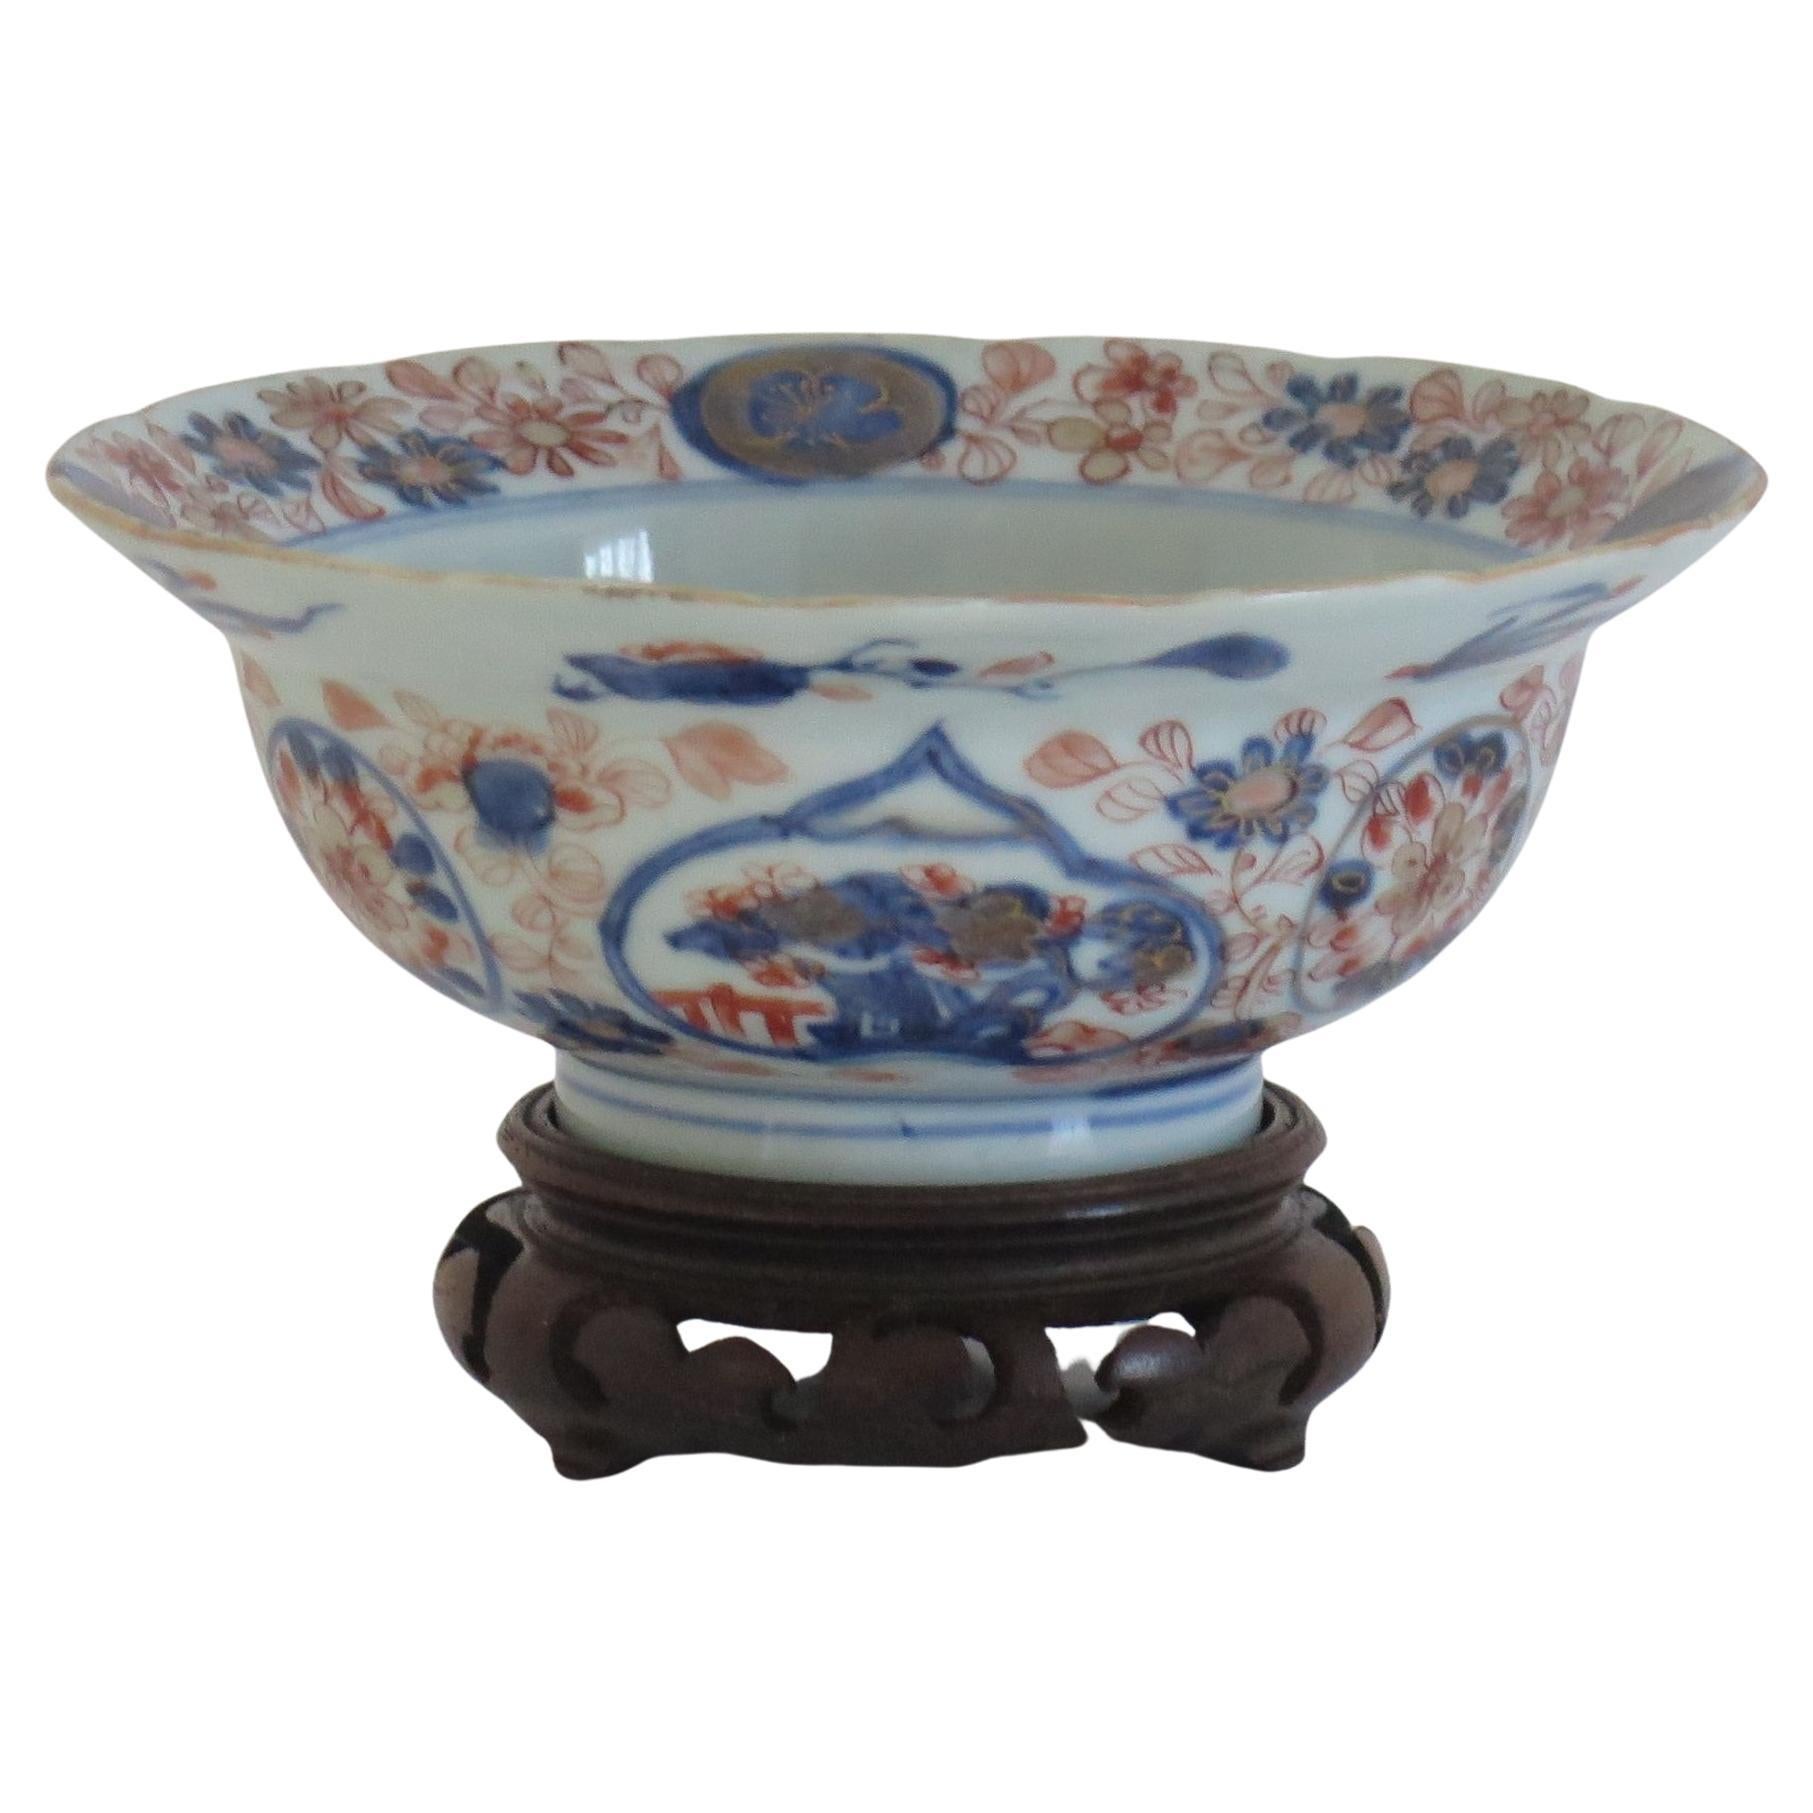 Chinese Export Porcelain Imari Bowl with Wood Stand, Qing Kangxi, Circa 1700